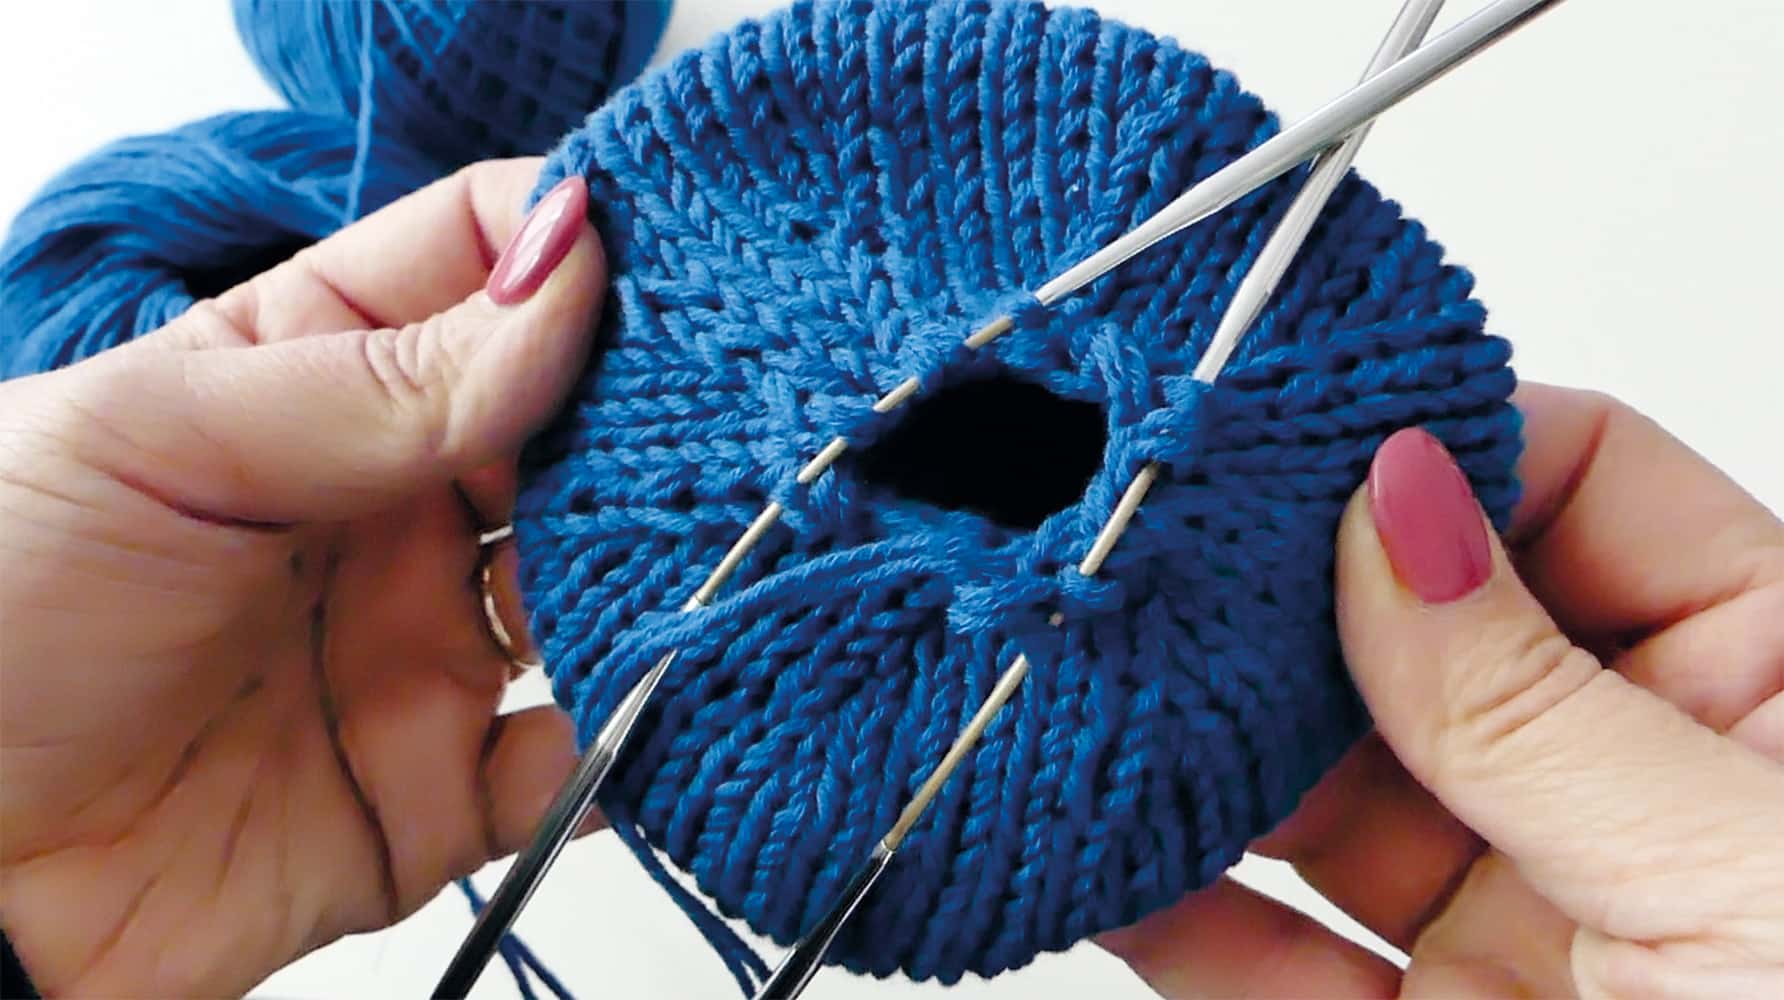 addiCraSyTrioLONG 09 4c Beanie Hat knitting,Beanie knitting tutorial,Beanie knitting addiCraSyTrio,Trio Beanie knitting,Beanie knitting for beginners